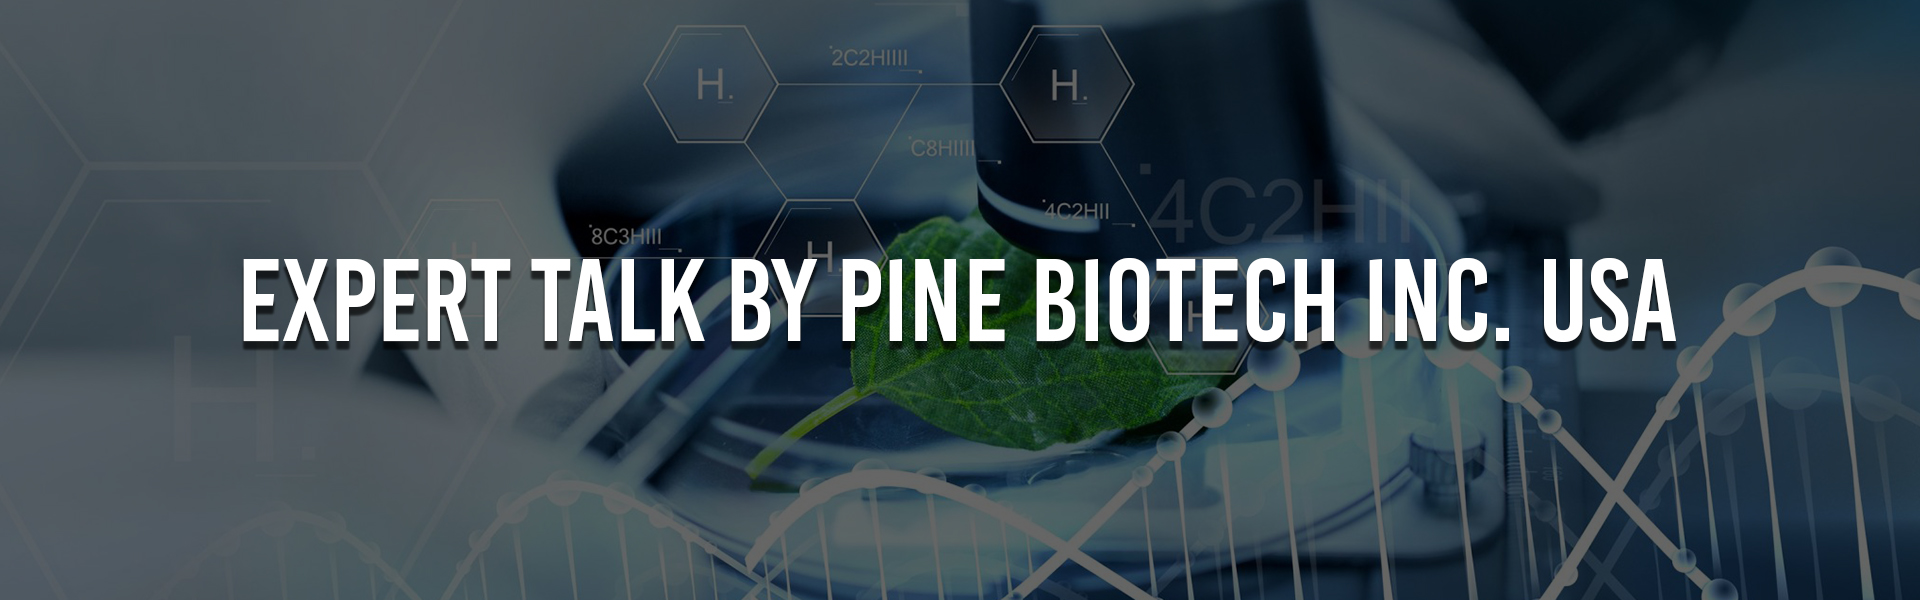 Expert talk by Pine Biotech Inc., USA 